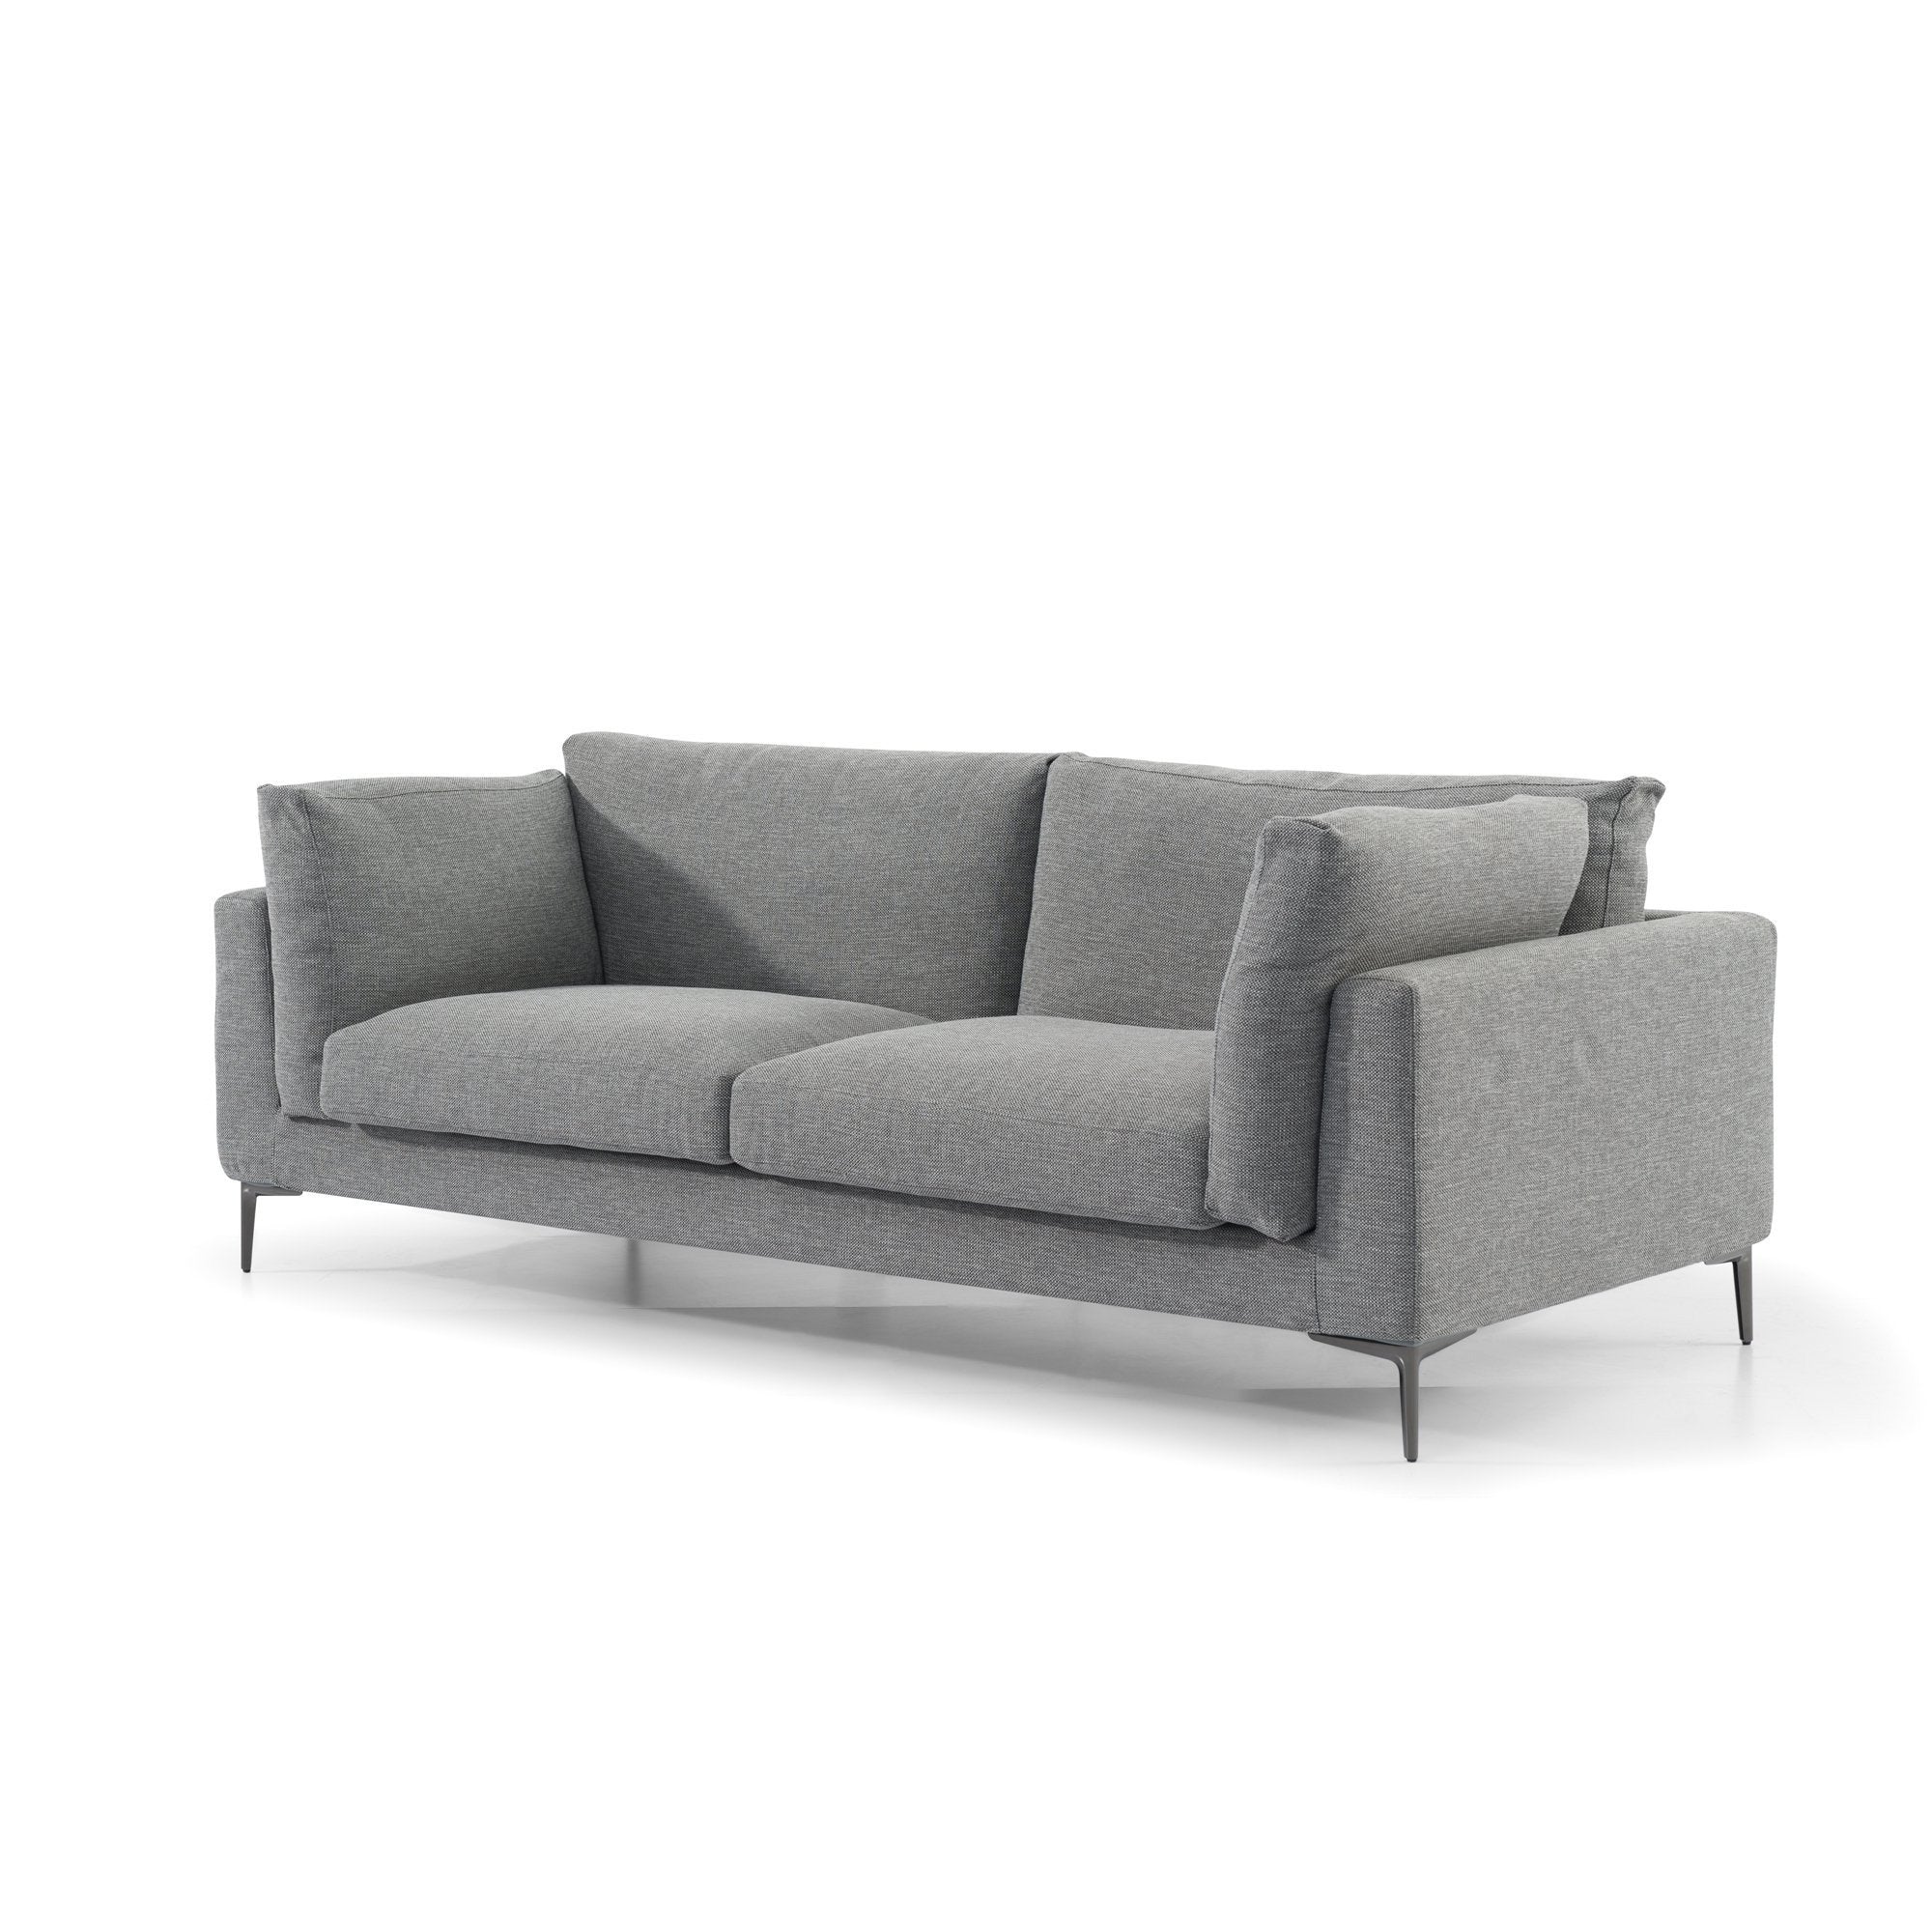 Emma 3 Seater Fabric Sofa - Graphite Grey with Black Legs